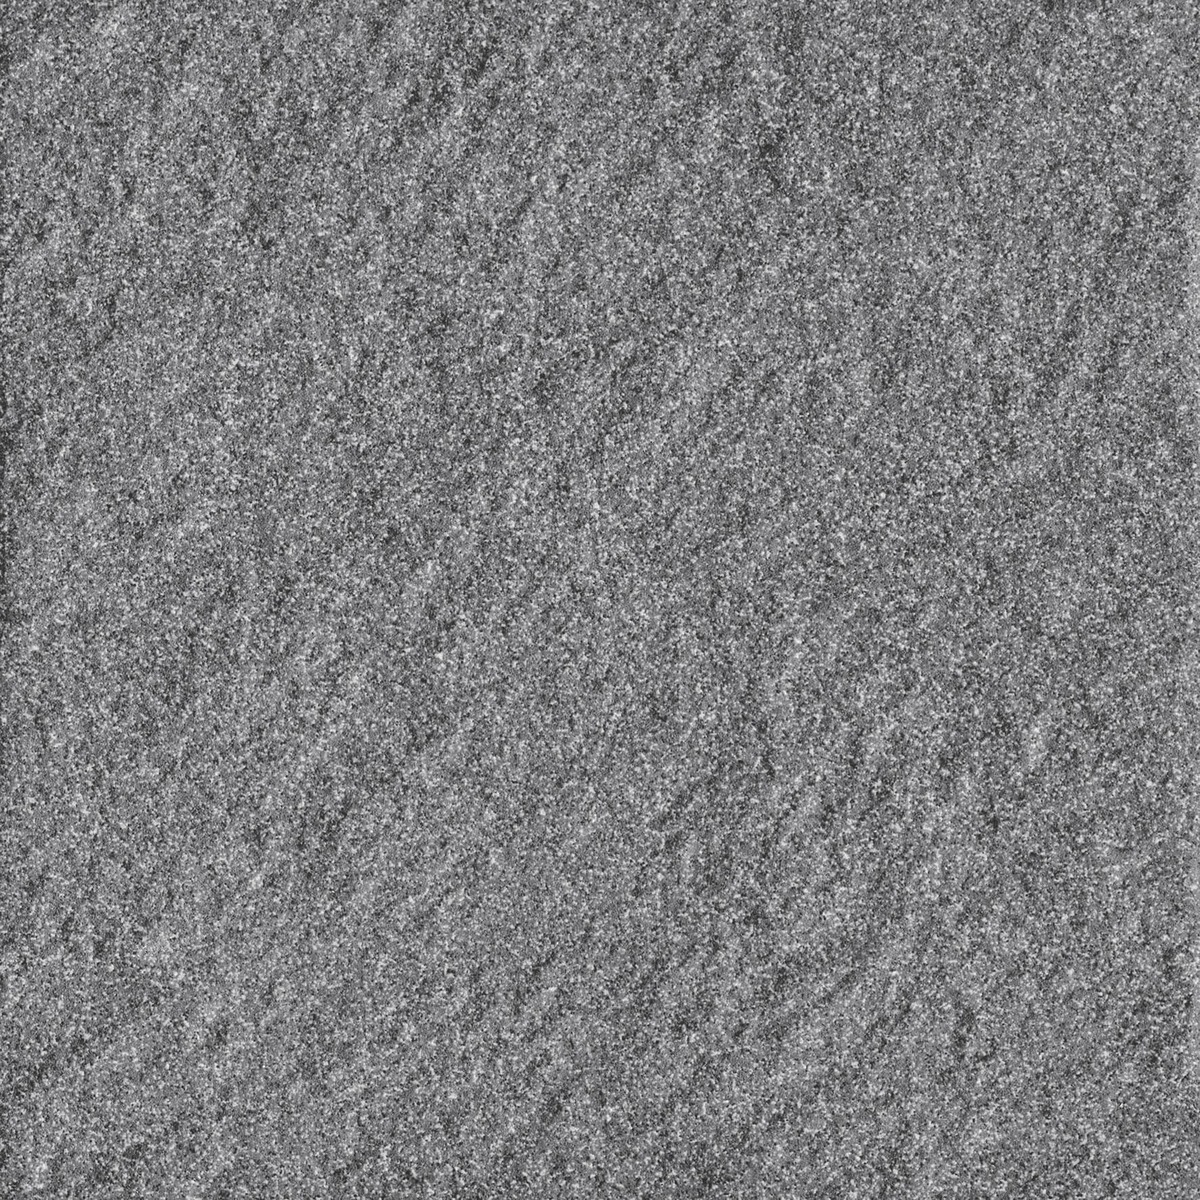 Dlažba Rako Taurus Granit antracitově šedá 30x30 cm protiskluz TR734065.1 Rako